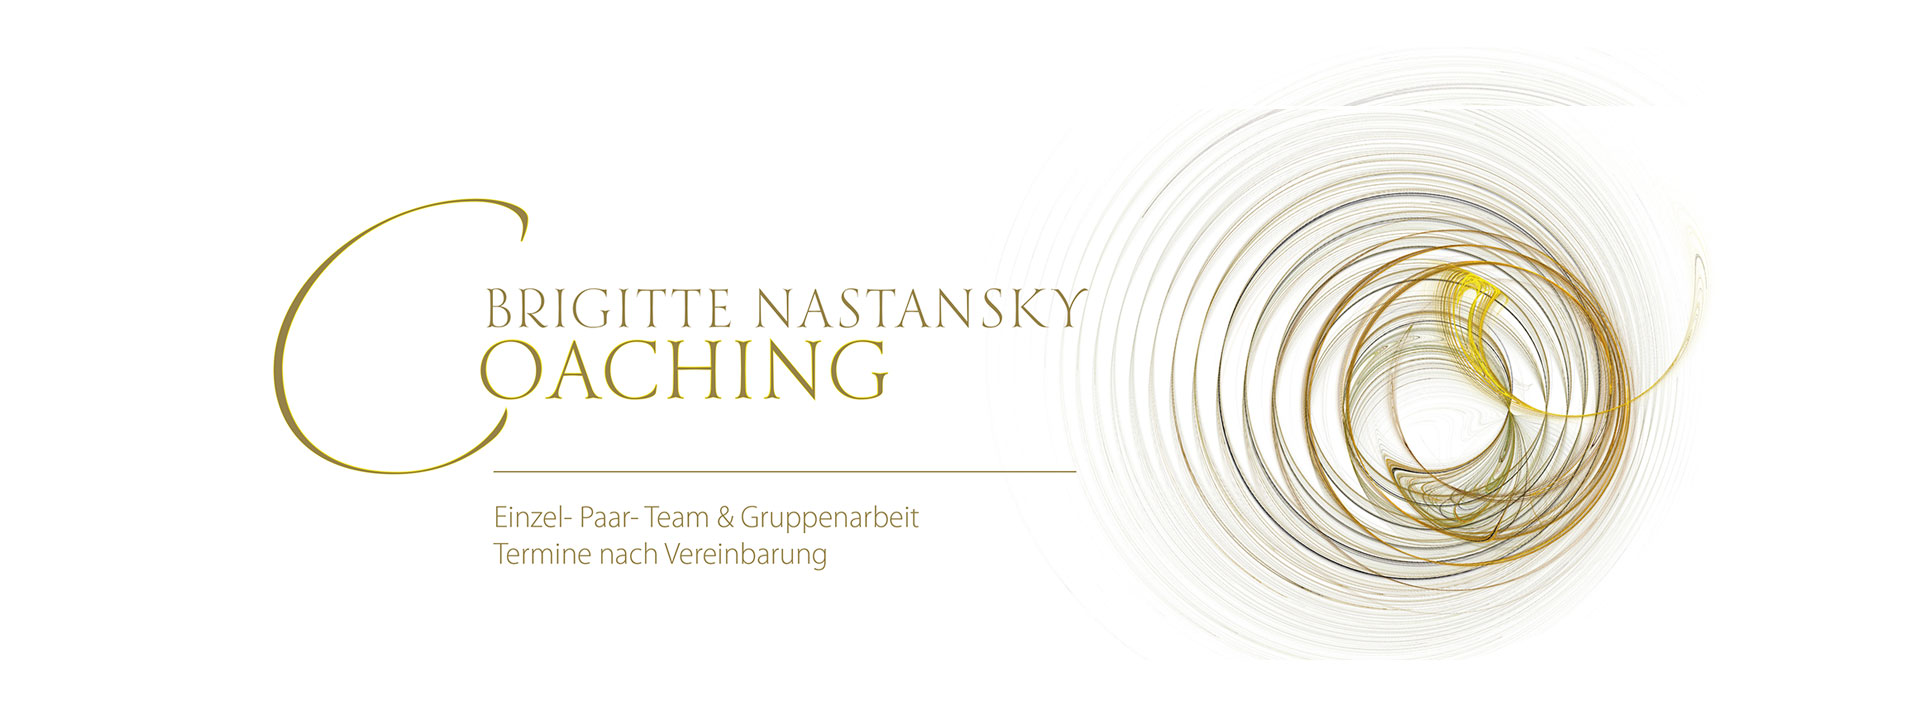 Brigitte Nastansky - Coaching